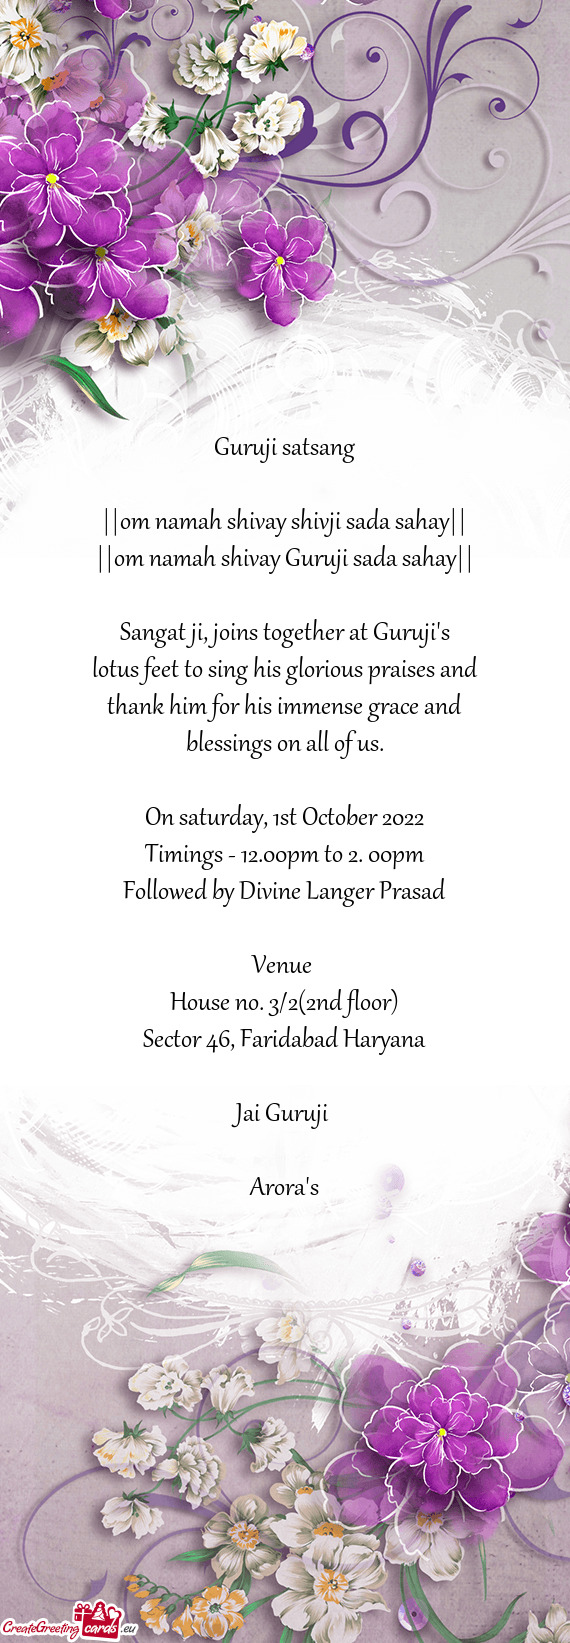 Sangat ji, joins together at Guruji's